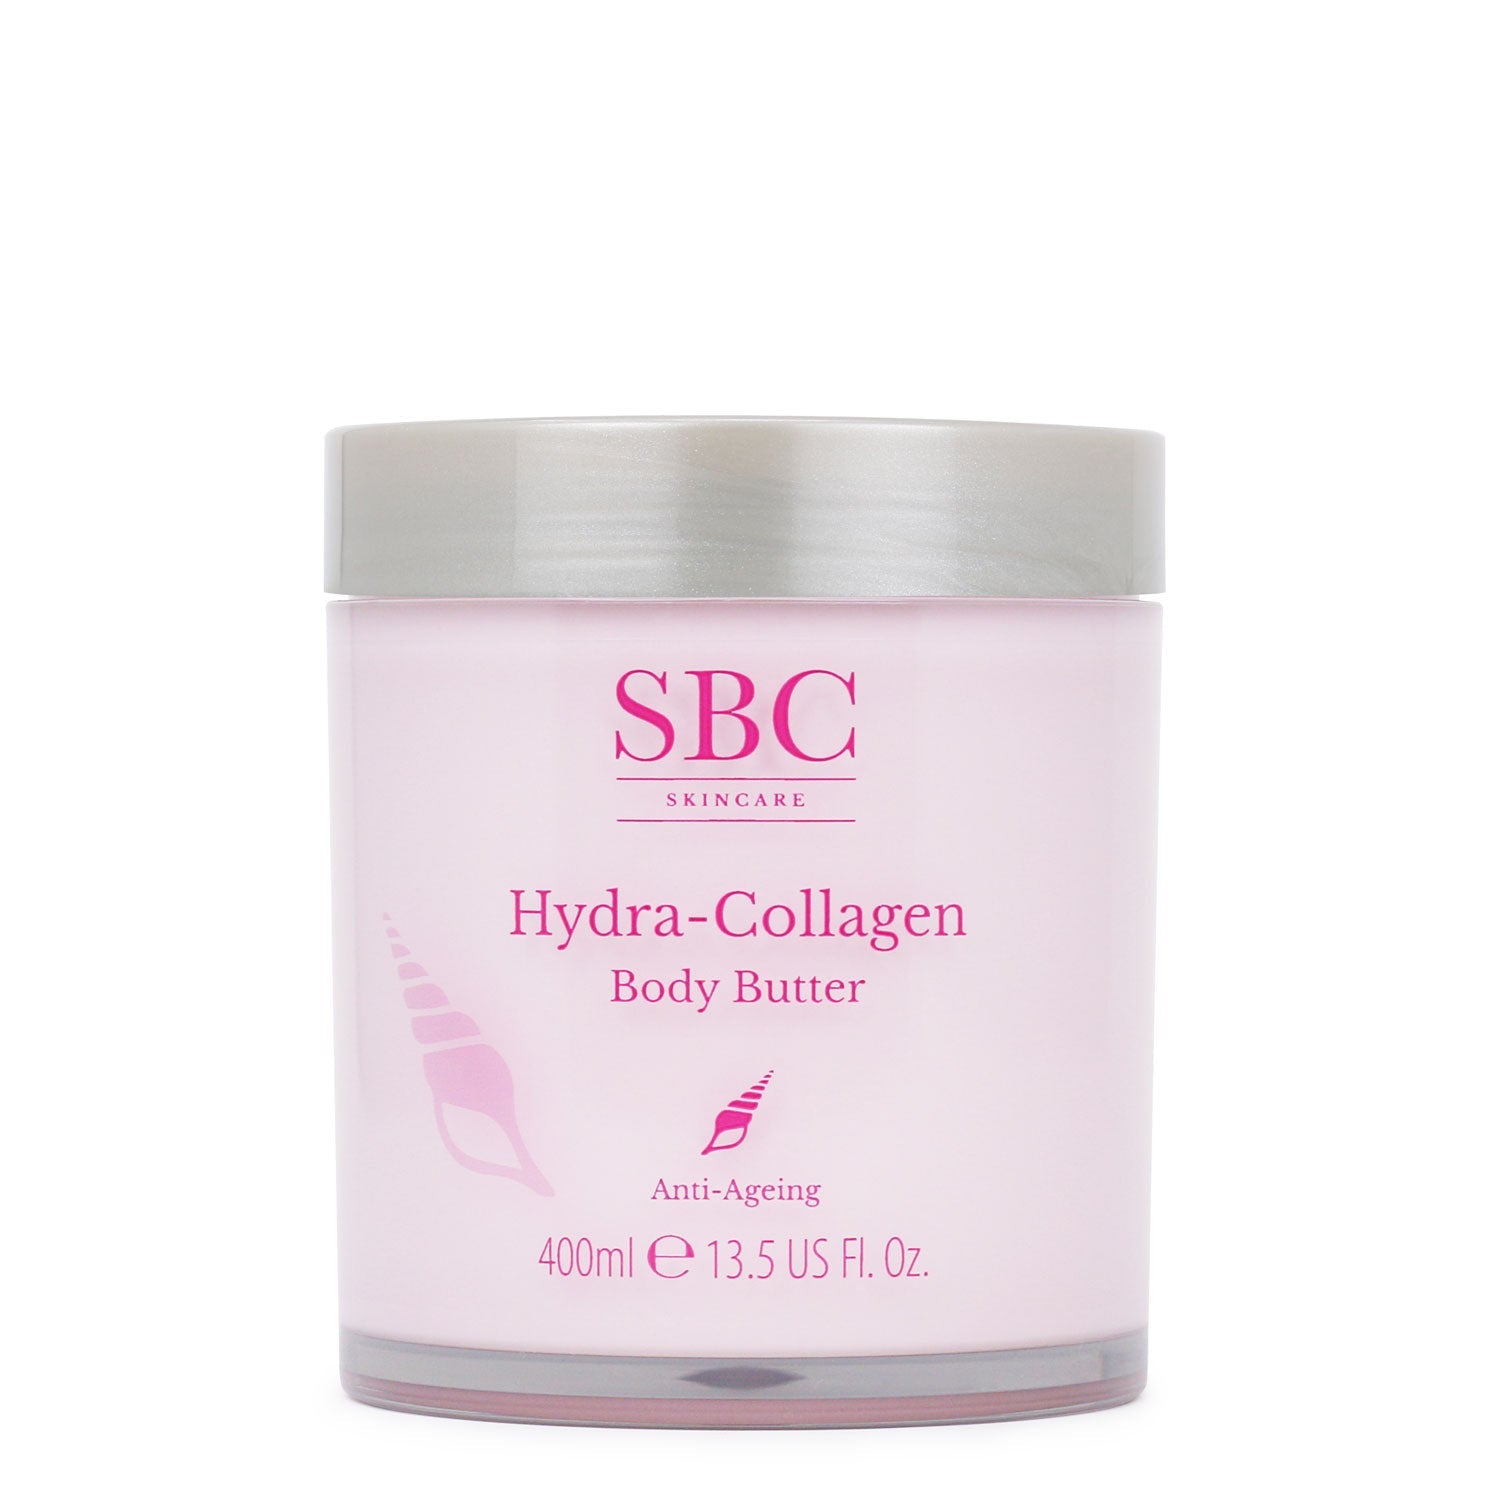 400ml Hydra-Collagen Body Butter